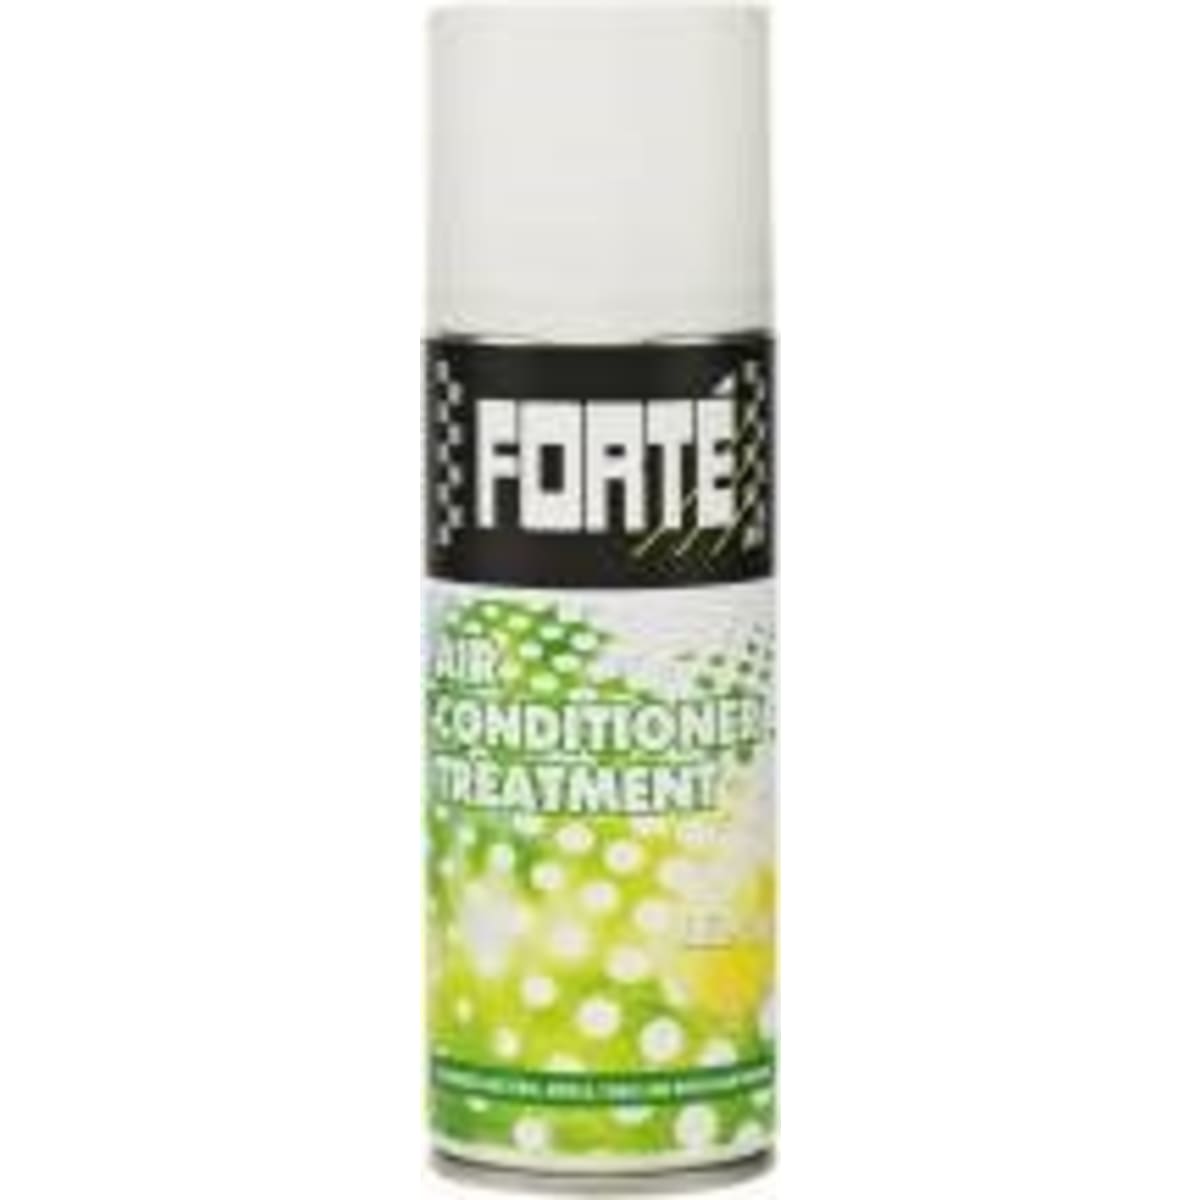 Forte Air Conditioner Treatment sitruuna 200ml tuuletusjärjestelmän  puhdistusaine  verkkokauppa